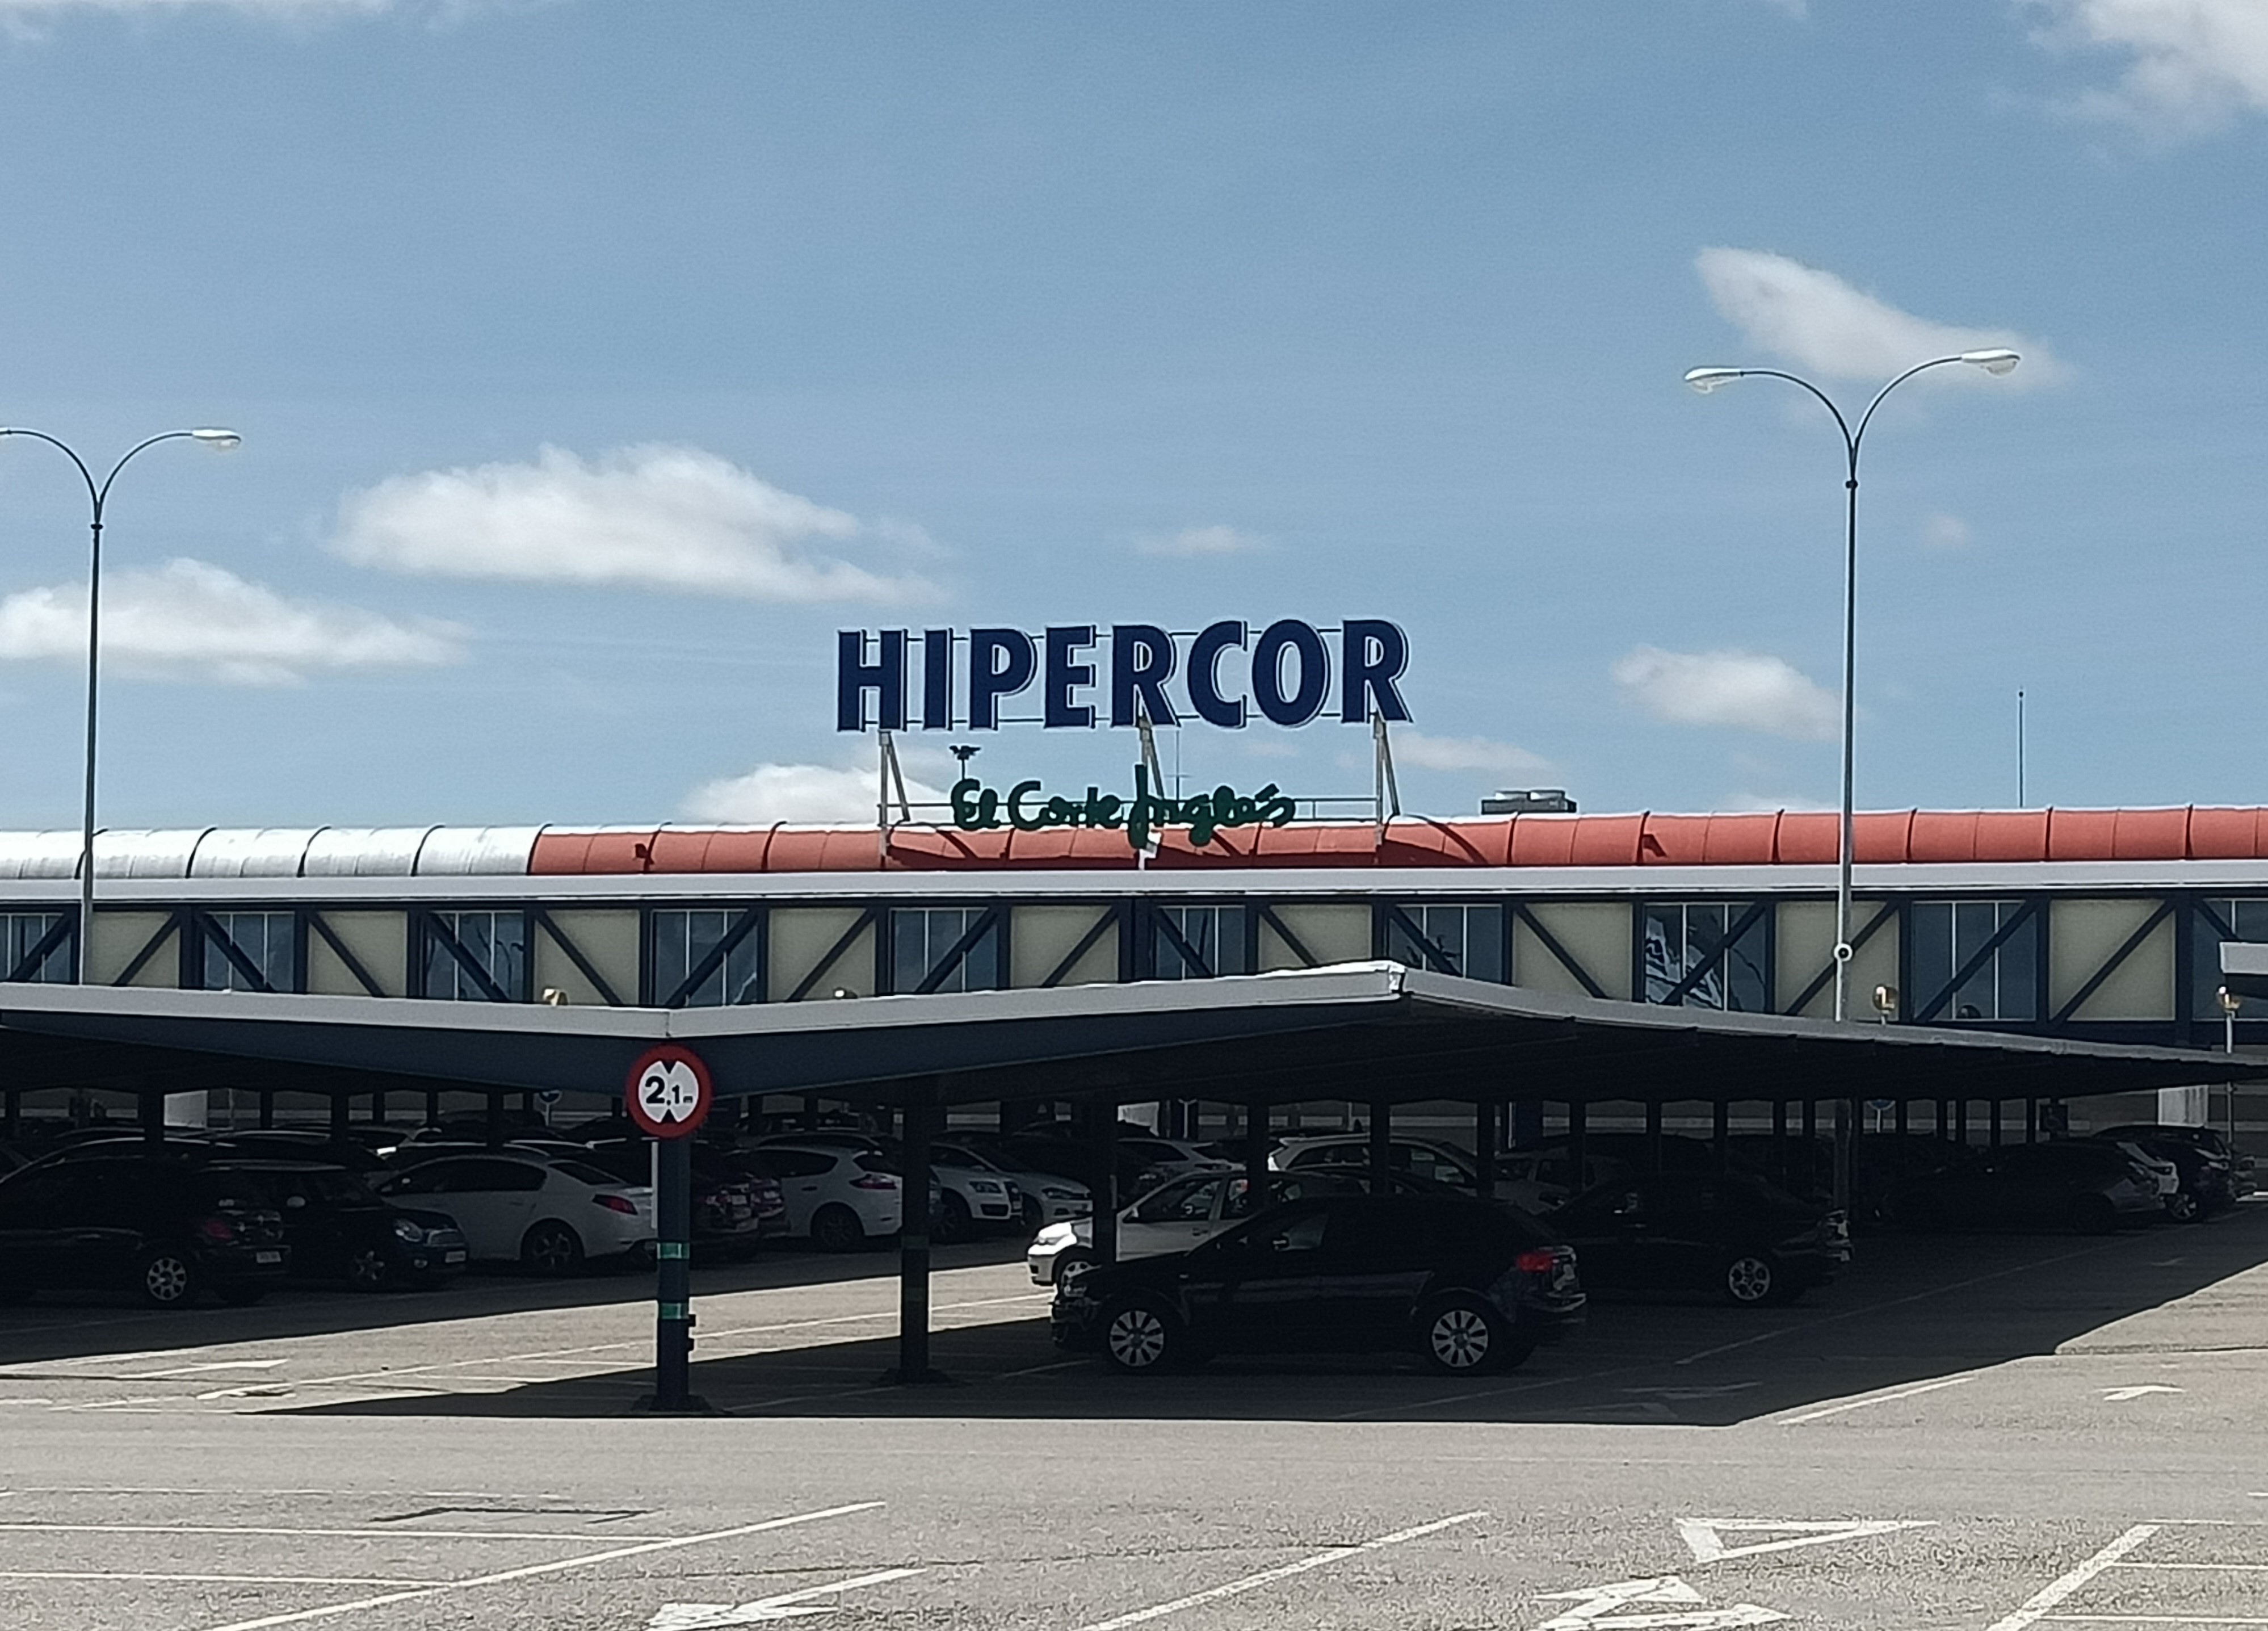 Hipercor